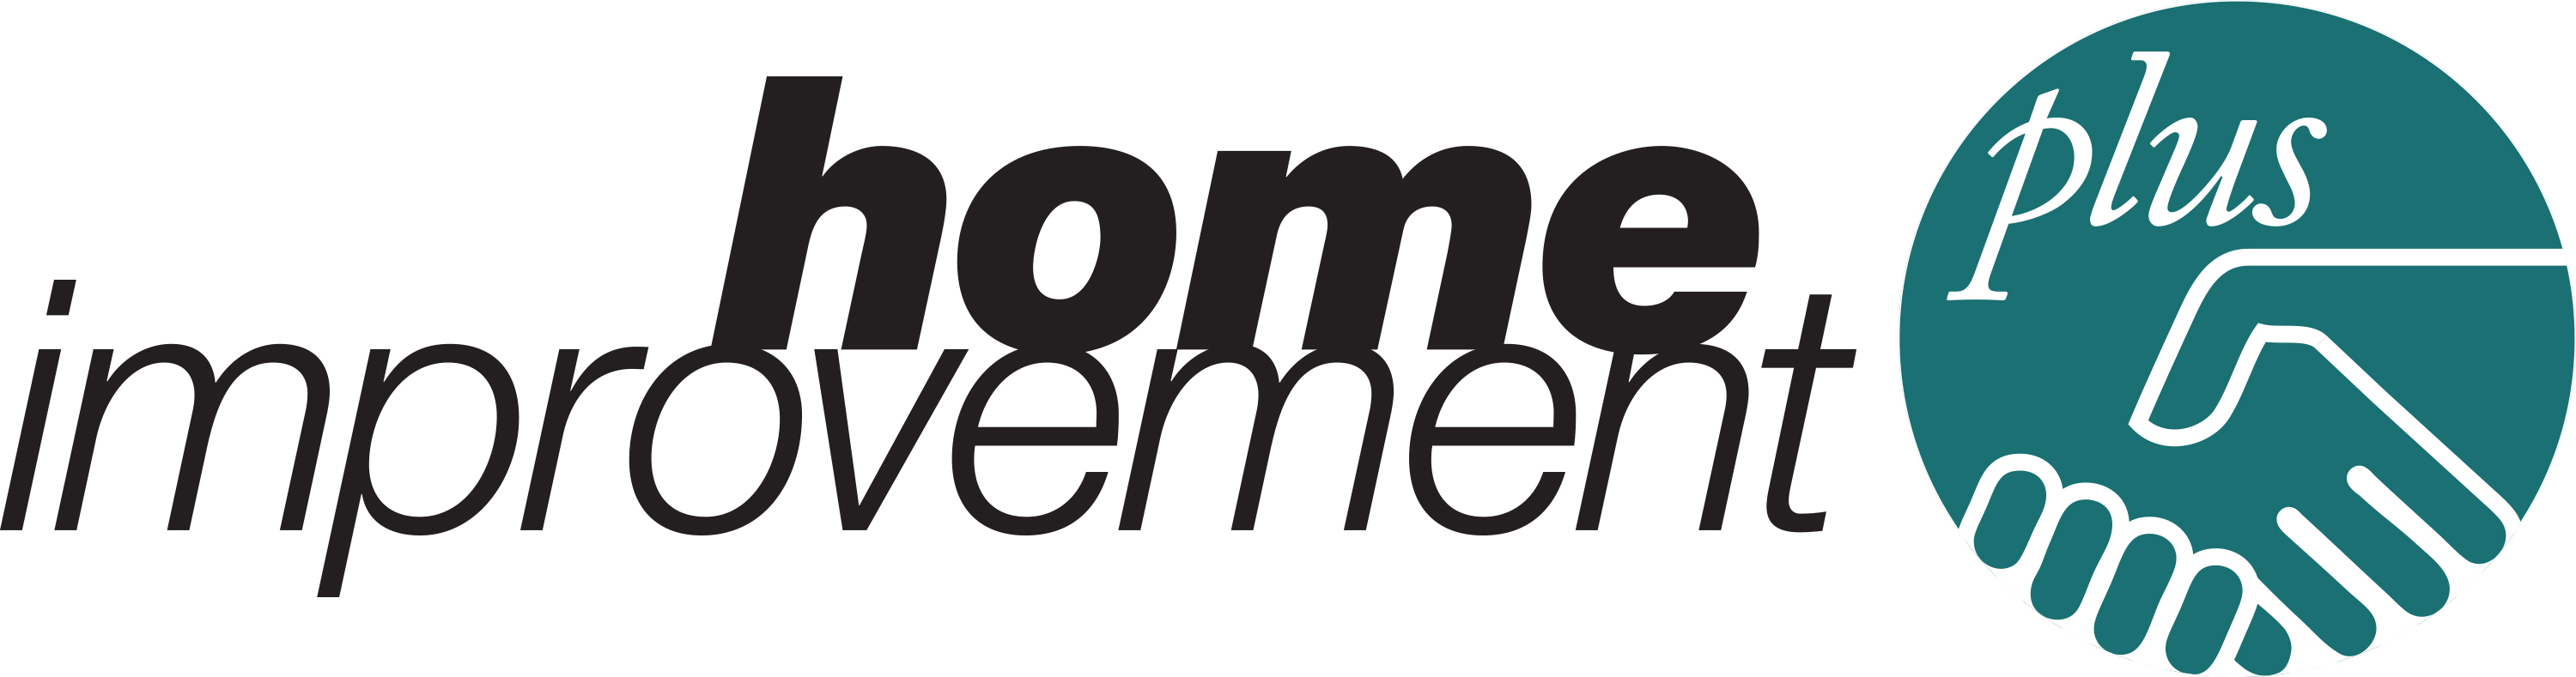 Home Improvement plus llc company logo